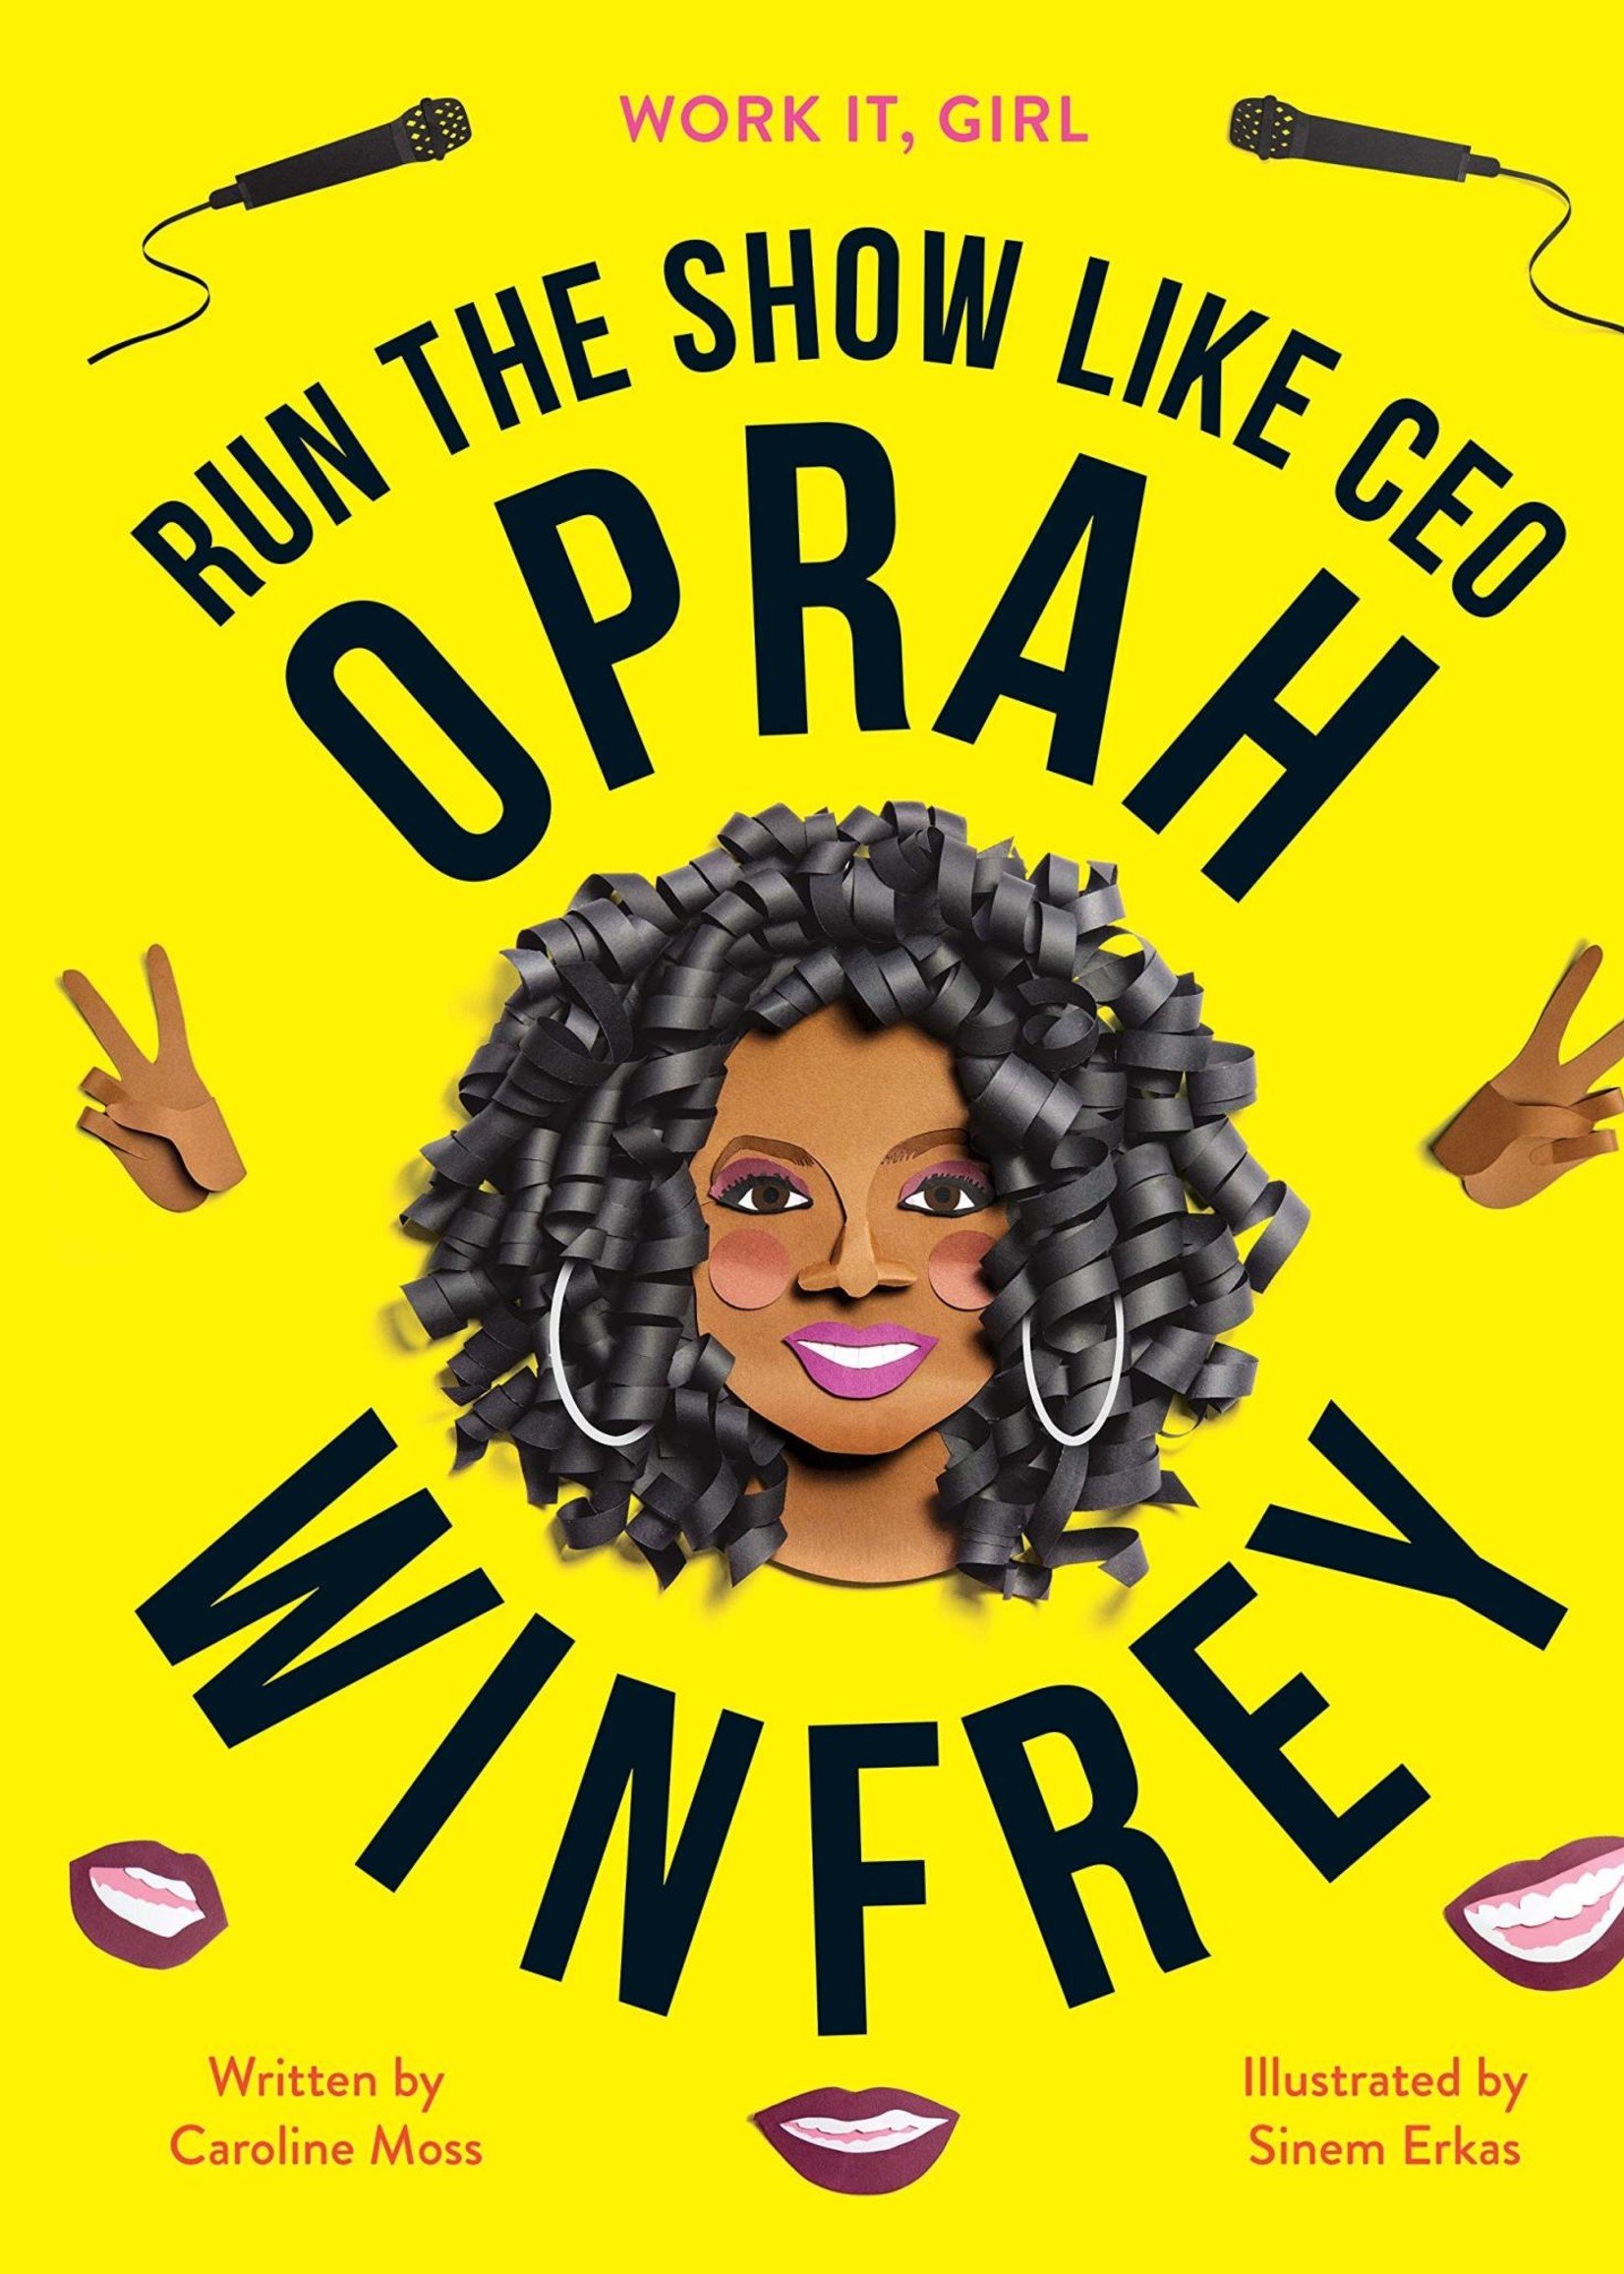 Work It, Girl: Oprah Winfrey: Run the Show Like CEO - Hardcover